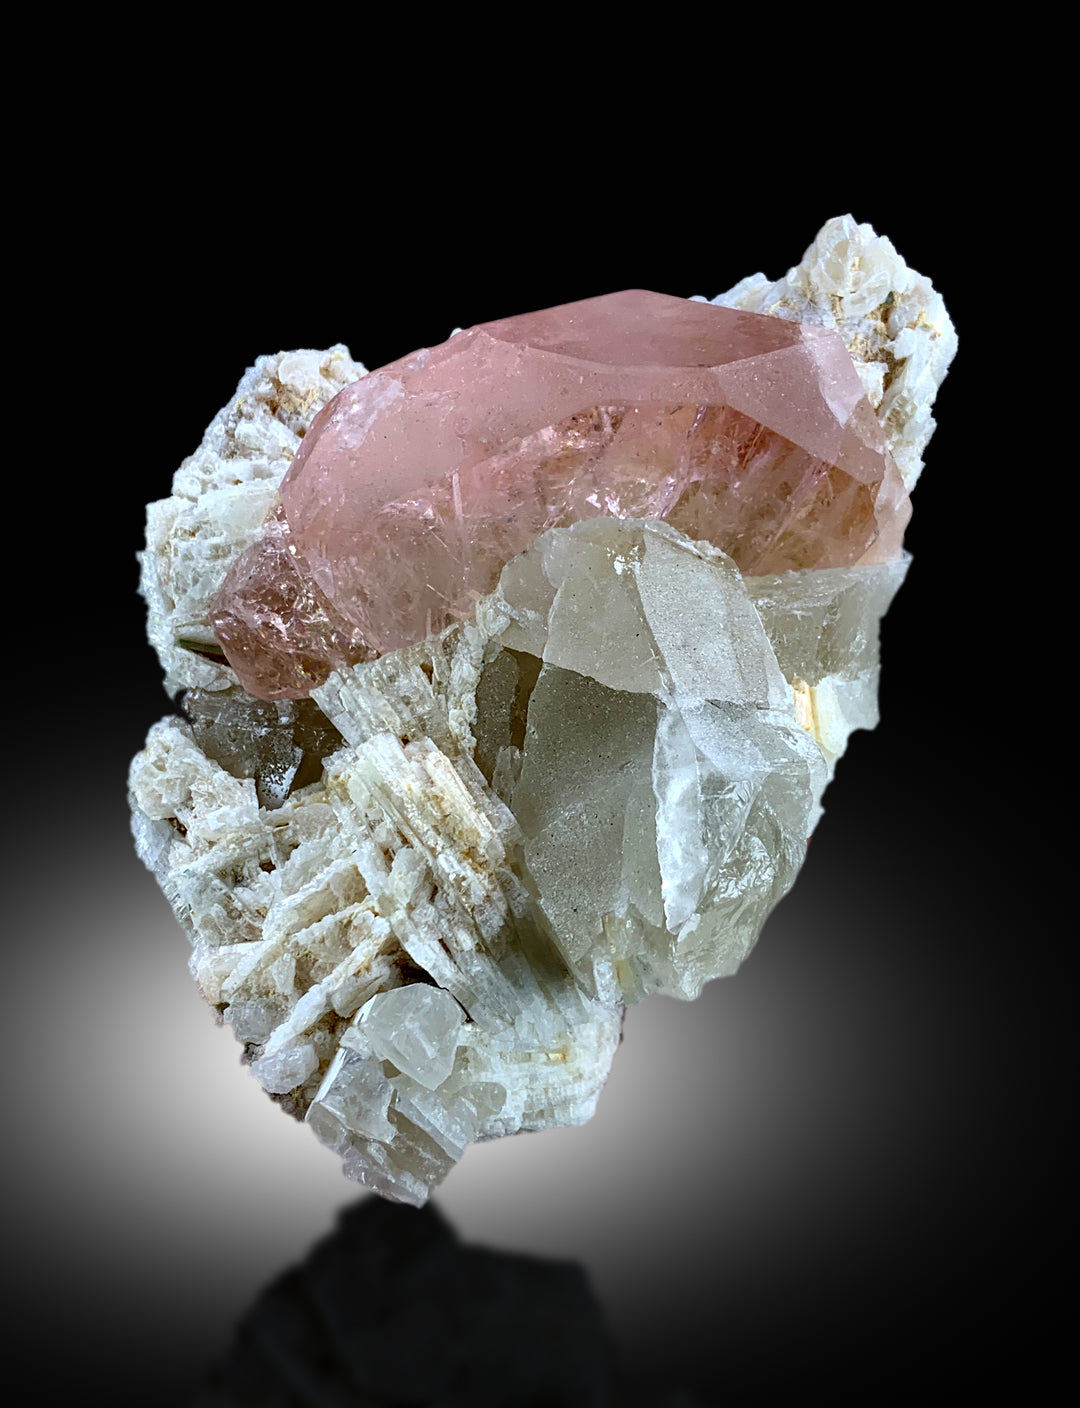 Exquisite Peach Pink Color Morganite with Quartz and Albite, Raw Mineral, Morganite Specimen from Dara-i-Pech Afghanistan - 424 gram